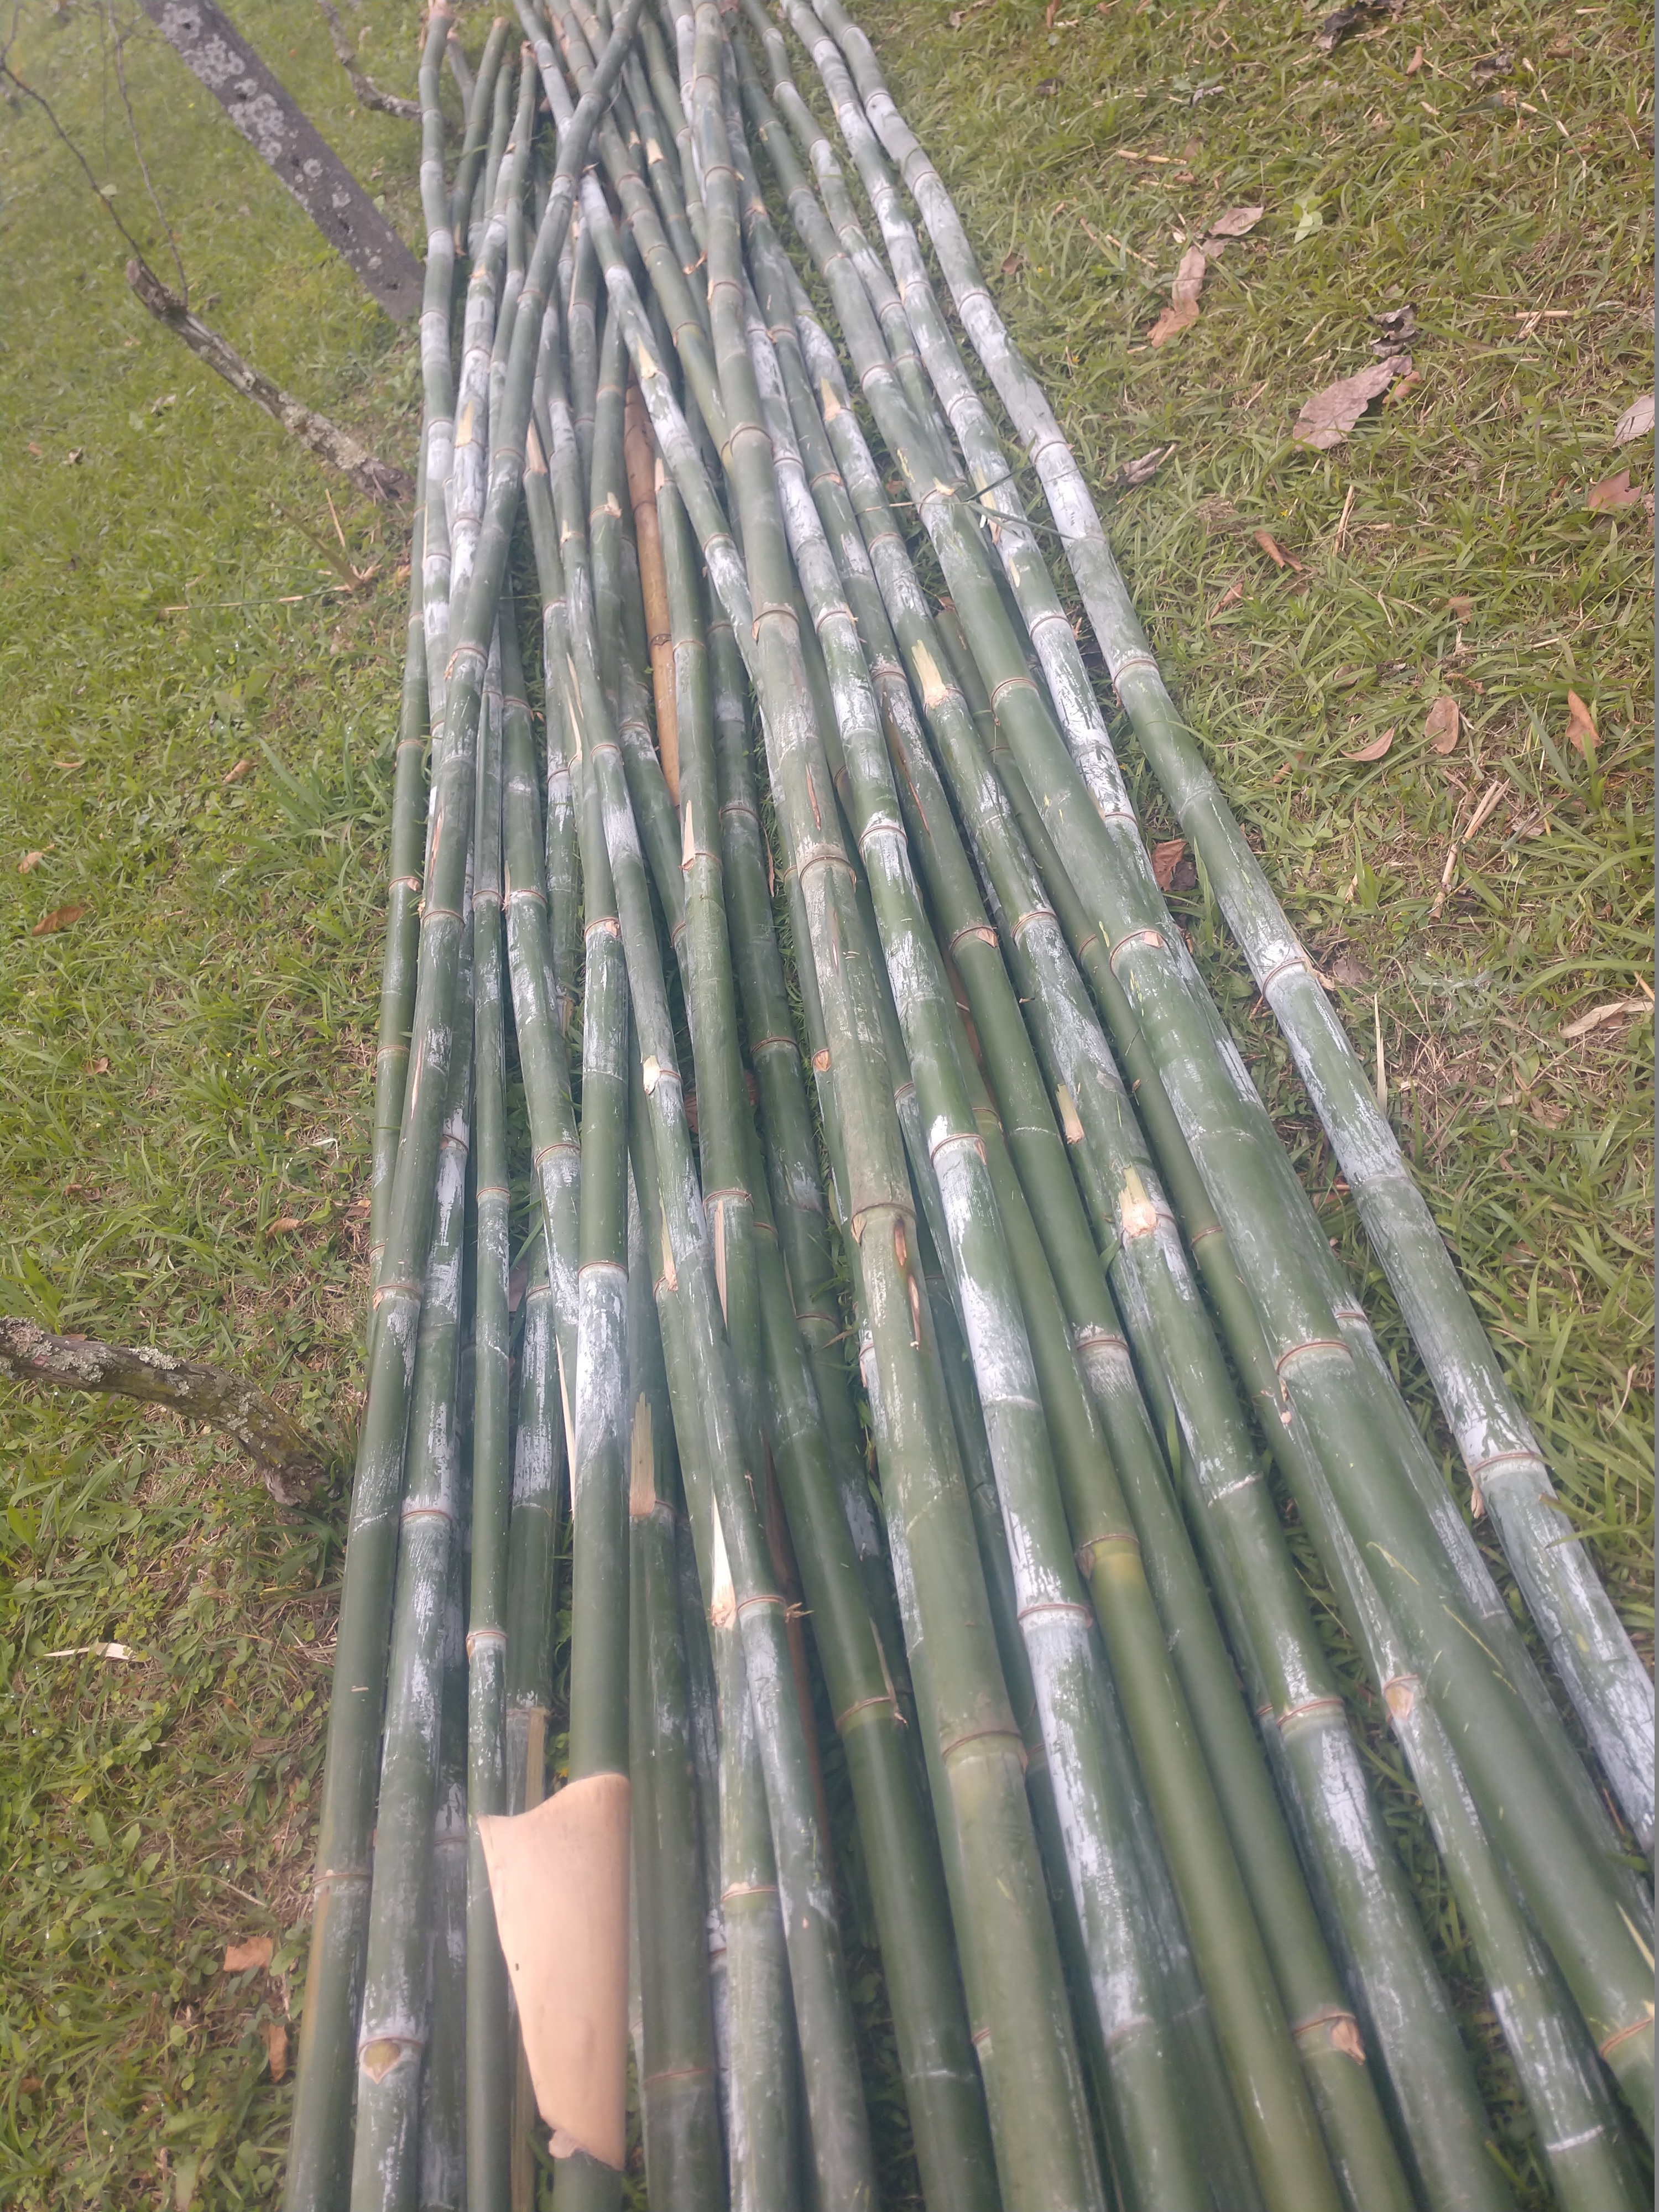 20190719 Fazenda Bambusa tuldoides touceira a ser removida para obra nova adm estrutura (8) bambus cortados verdes